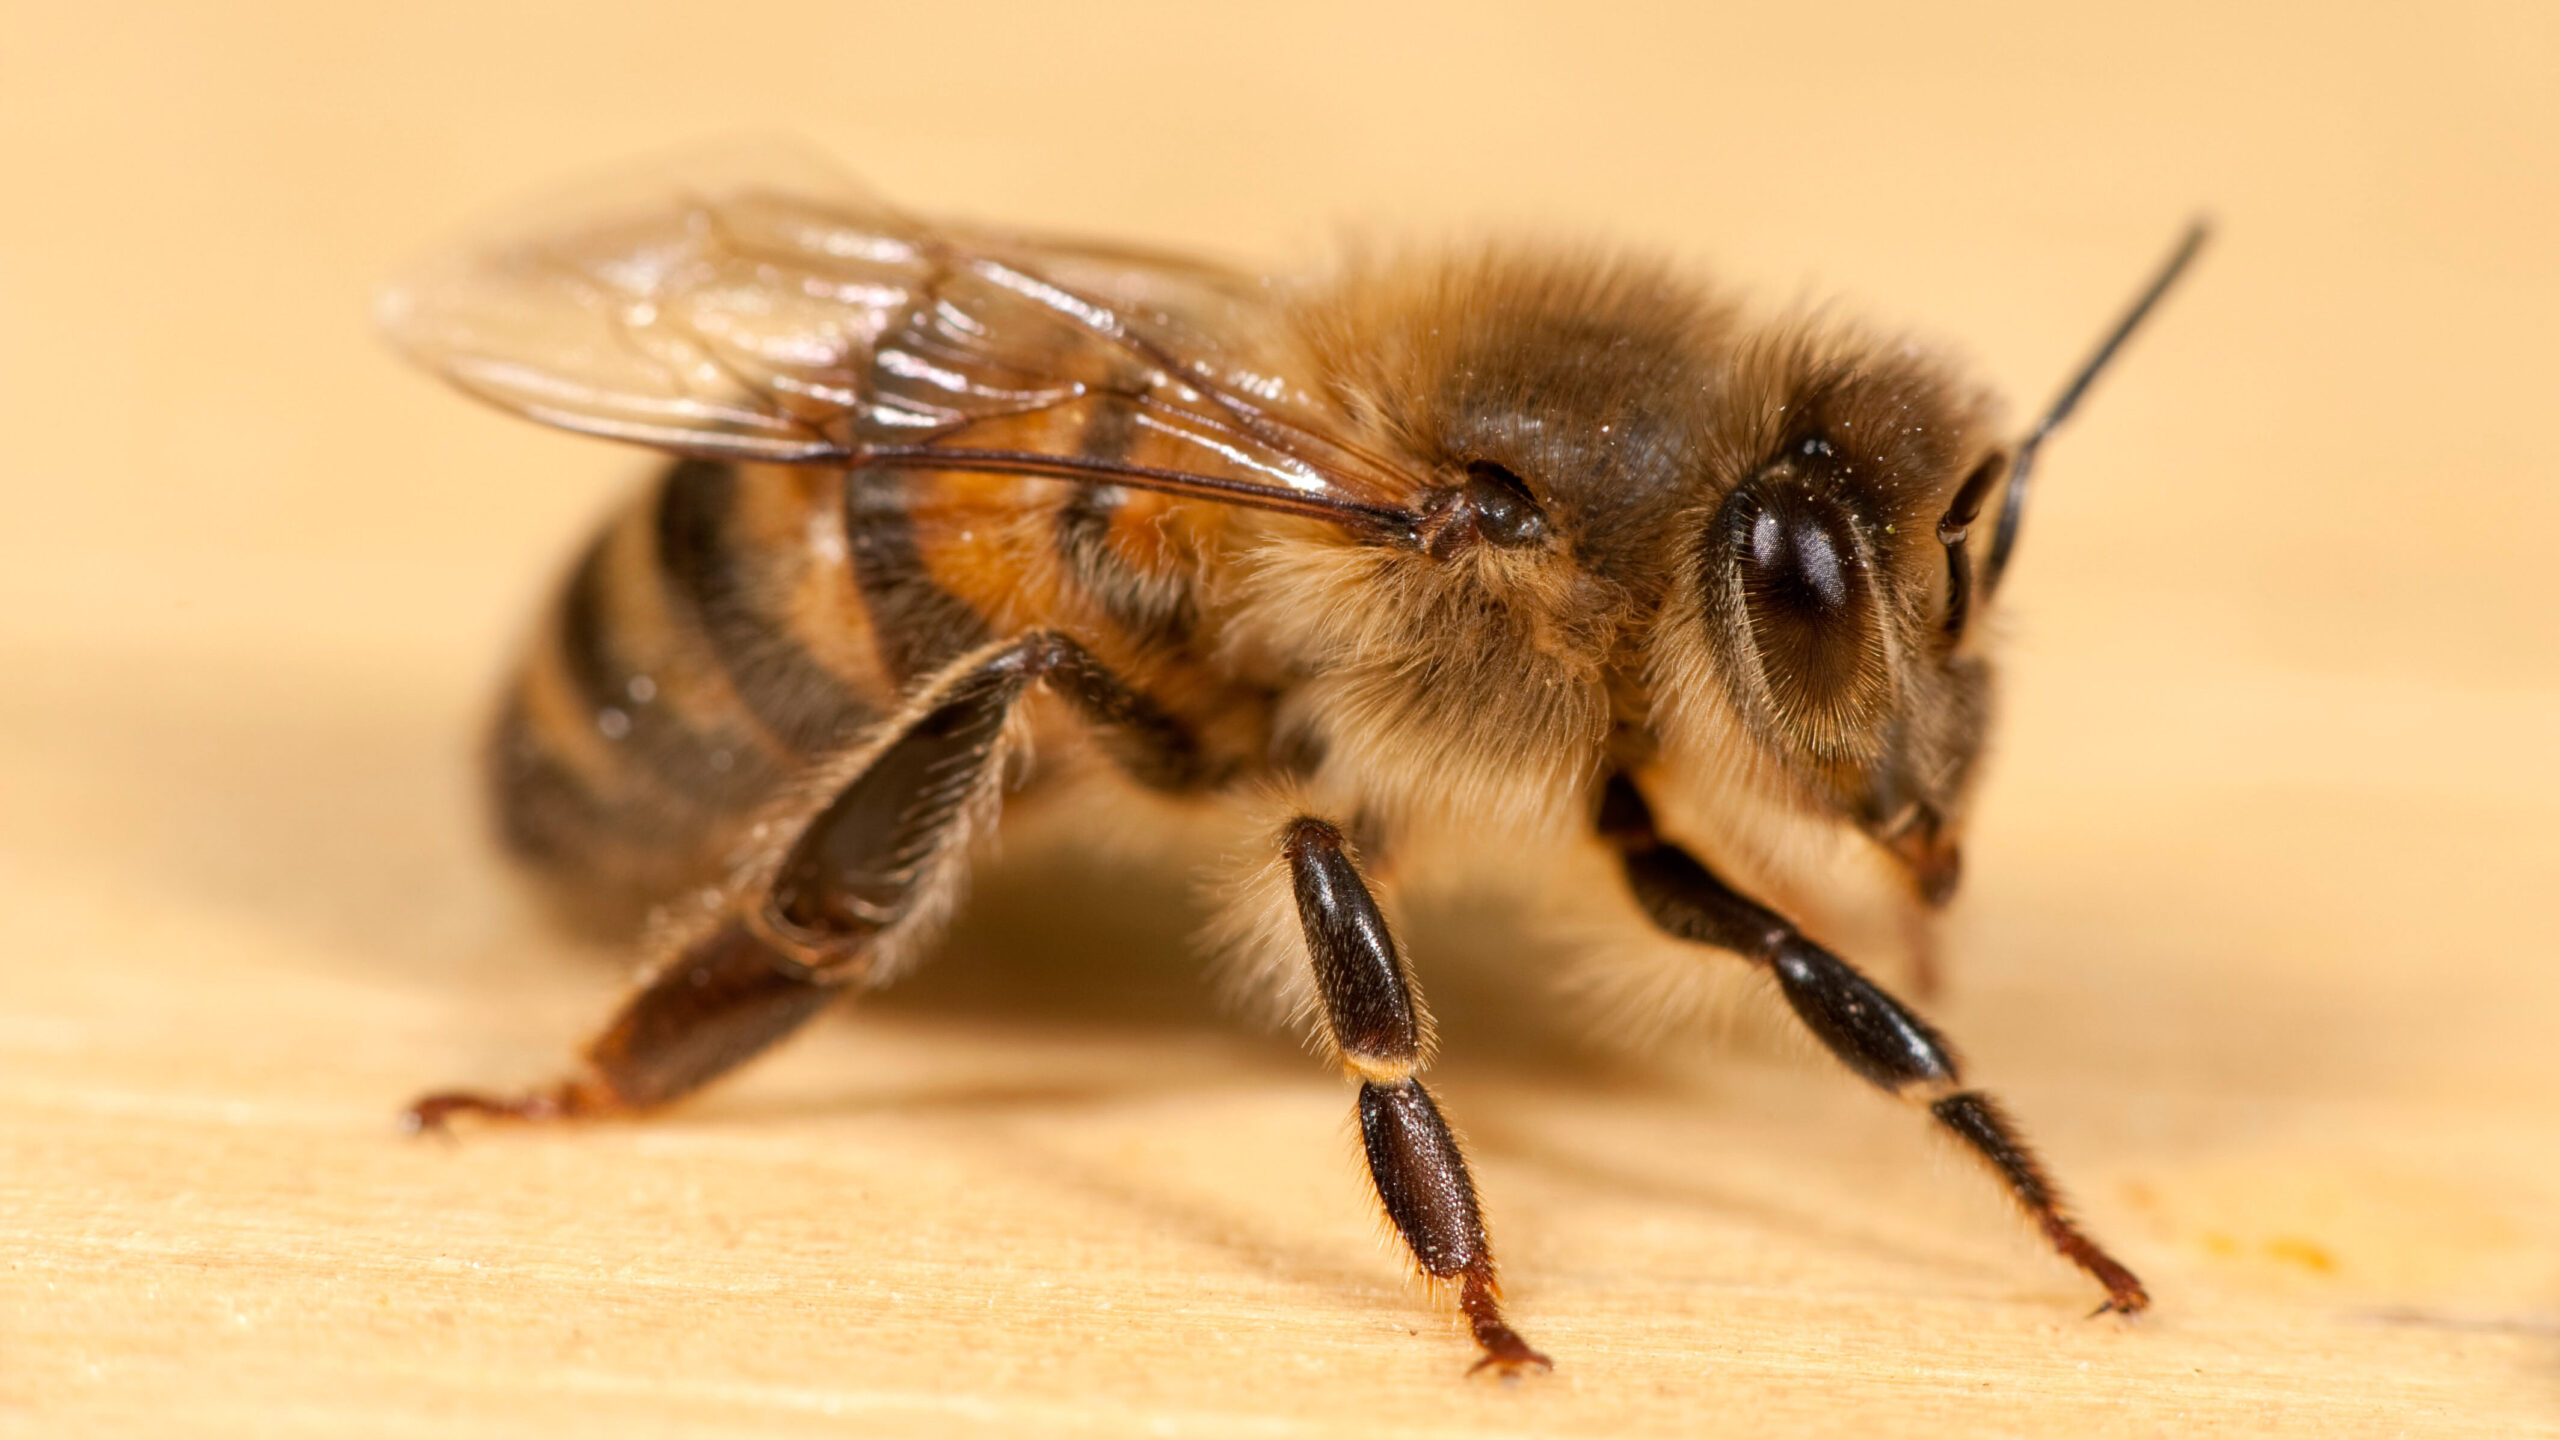 The European honey bee